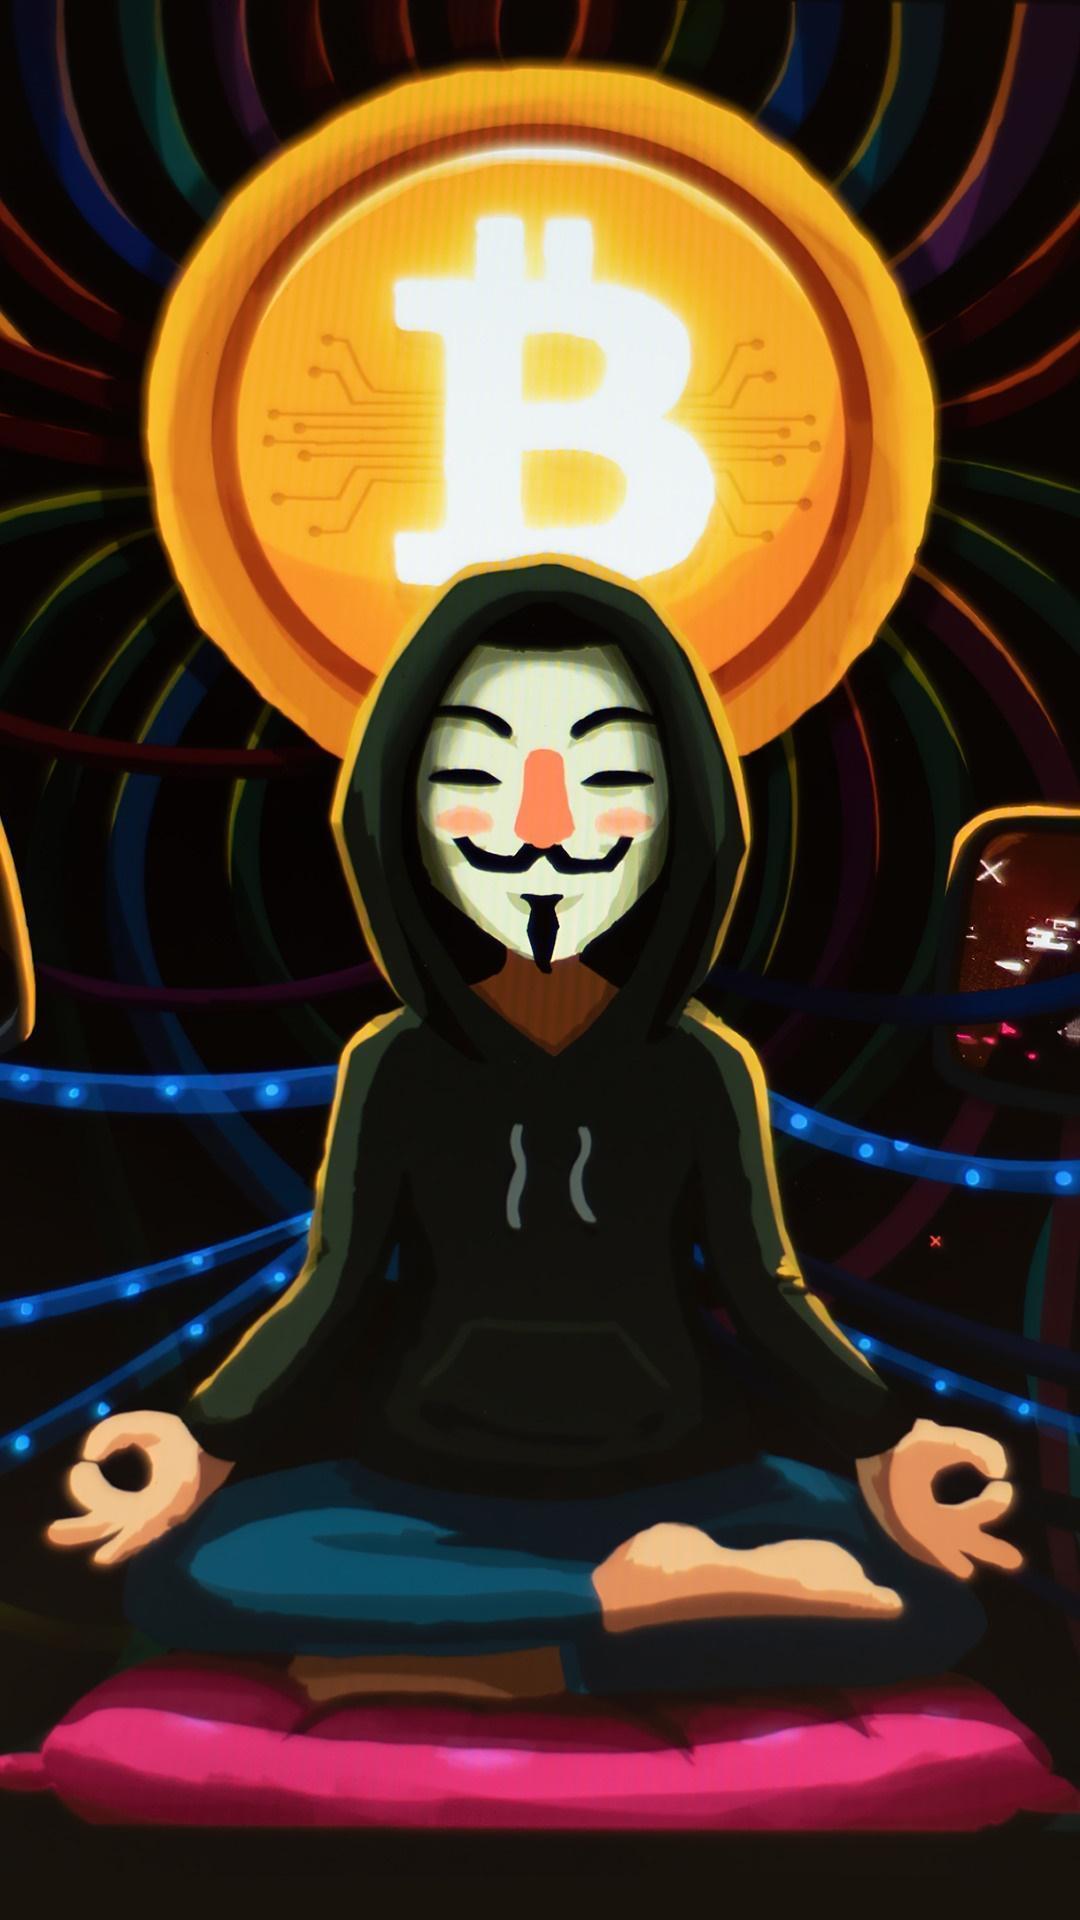 HD wallpaper, Anonymous, Meditation, Bitcoin